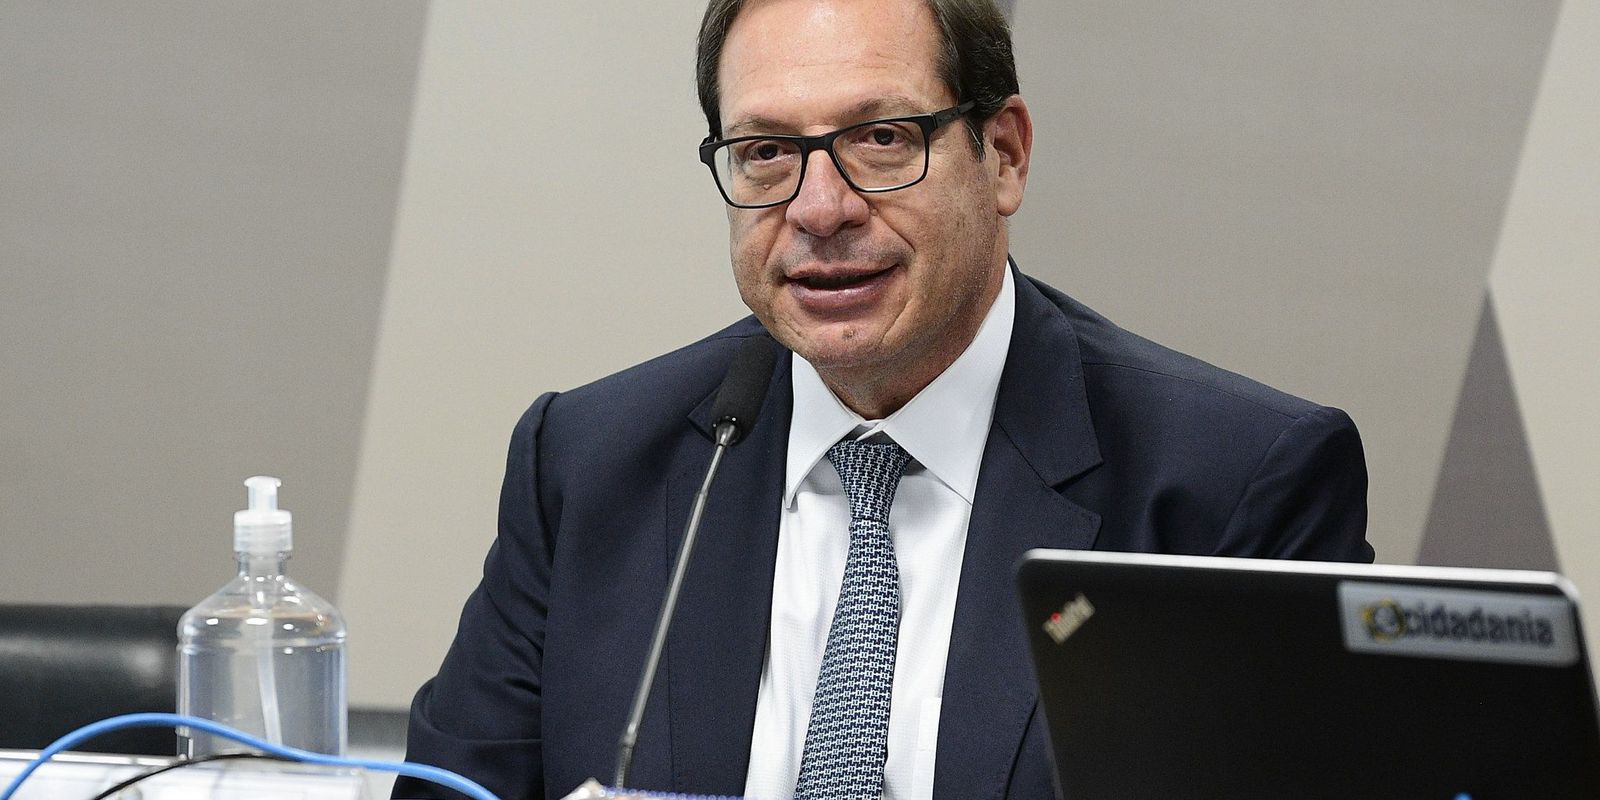 Senate CCJ approves Luis Felipe Salomão for CNJ internal affairs